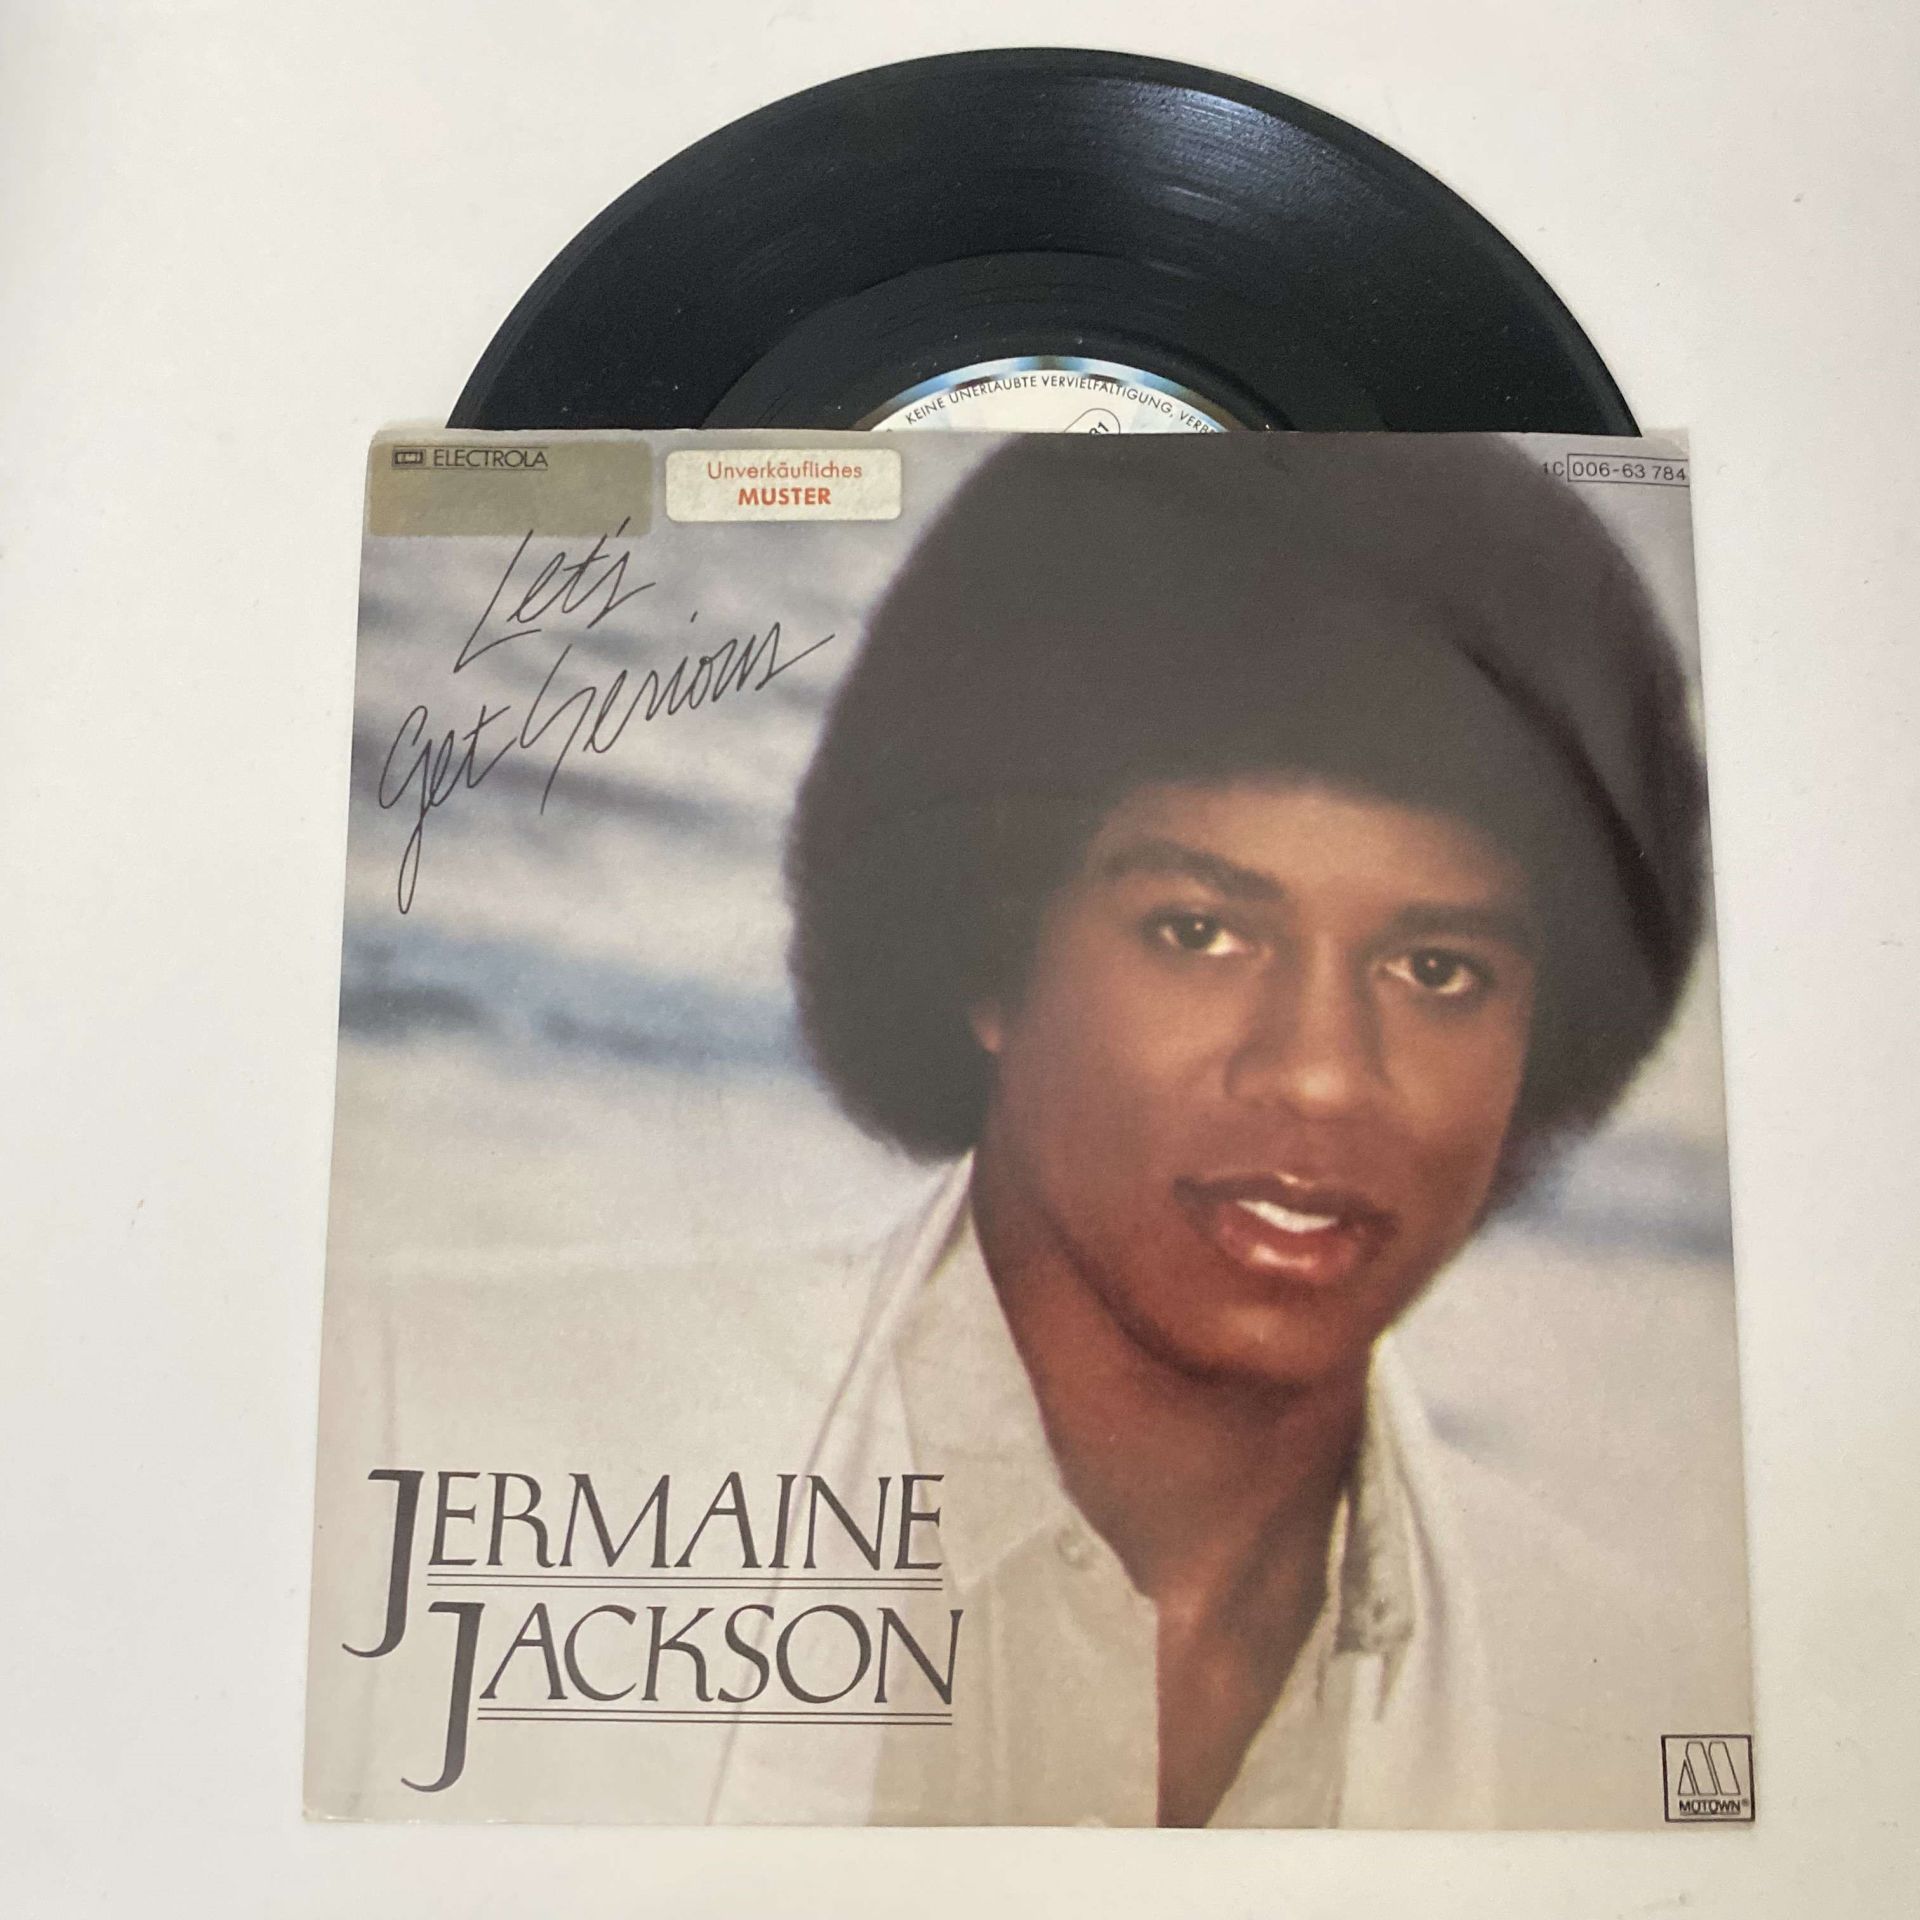 Jermaine Jackson – Let's Get Serious